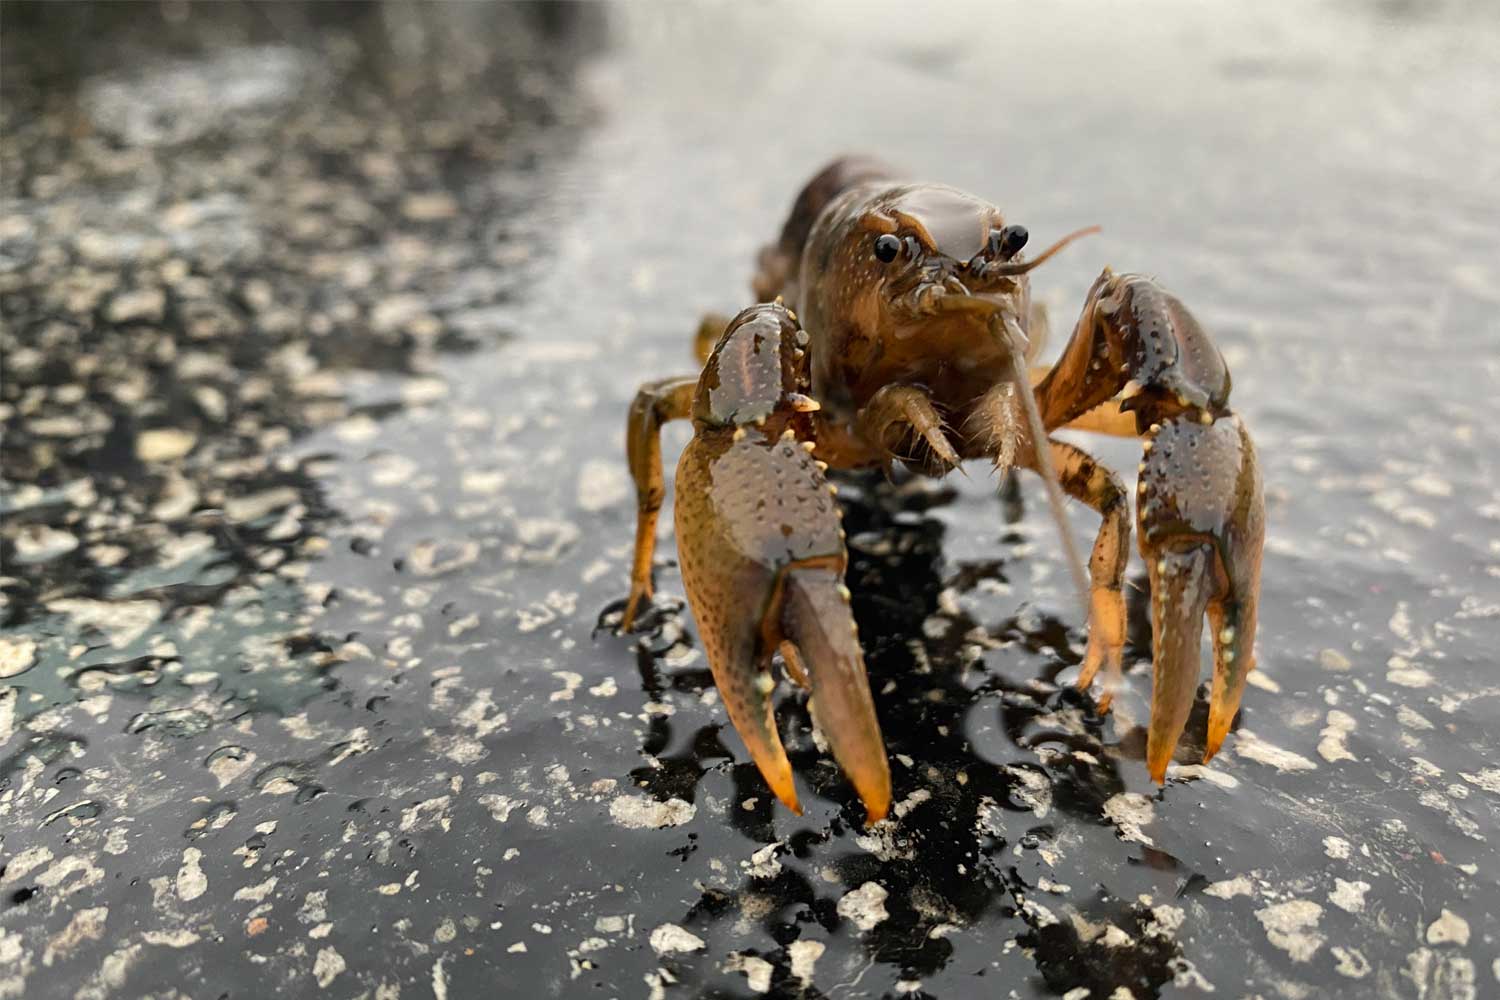 Crayfish on wet pavement.